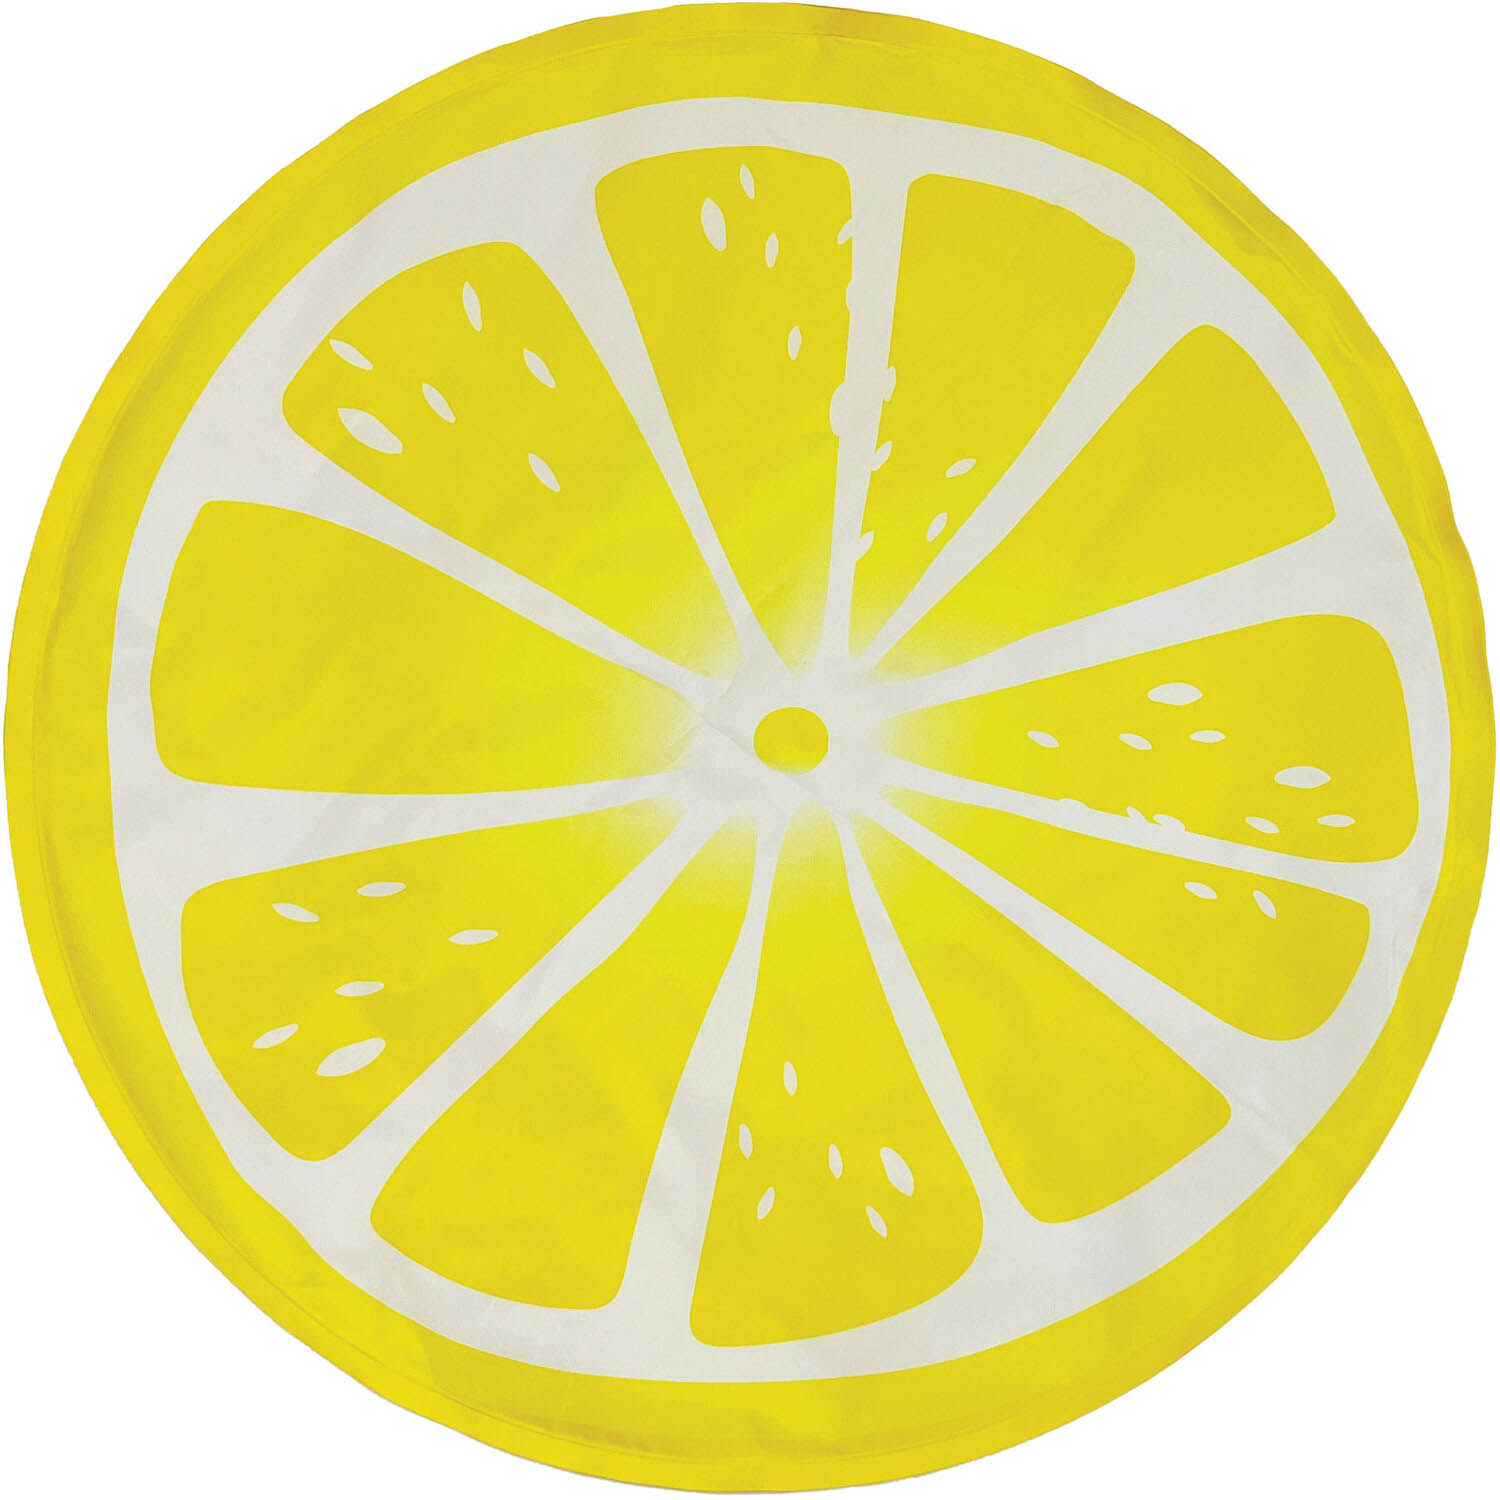 Fruit Pet Cooling Mat - Lemon Image 1